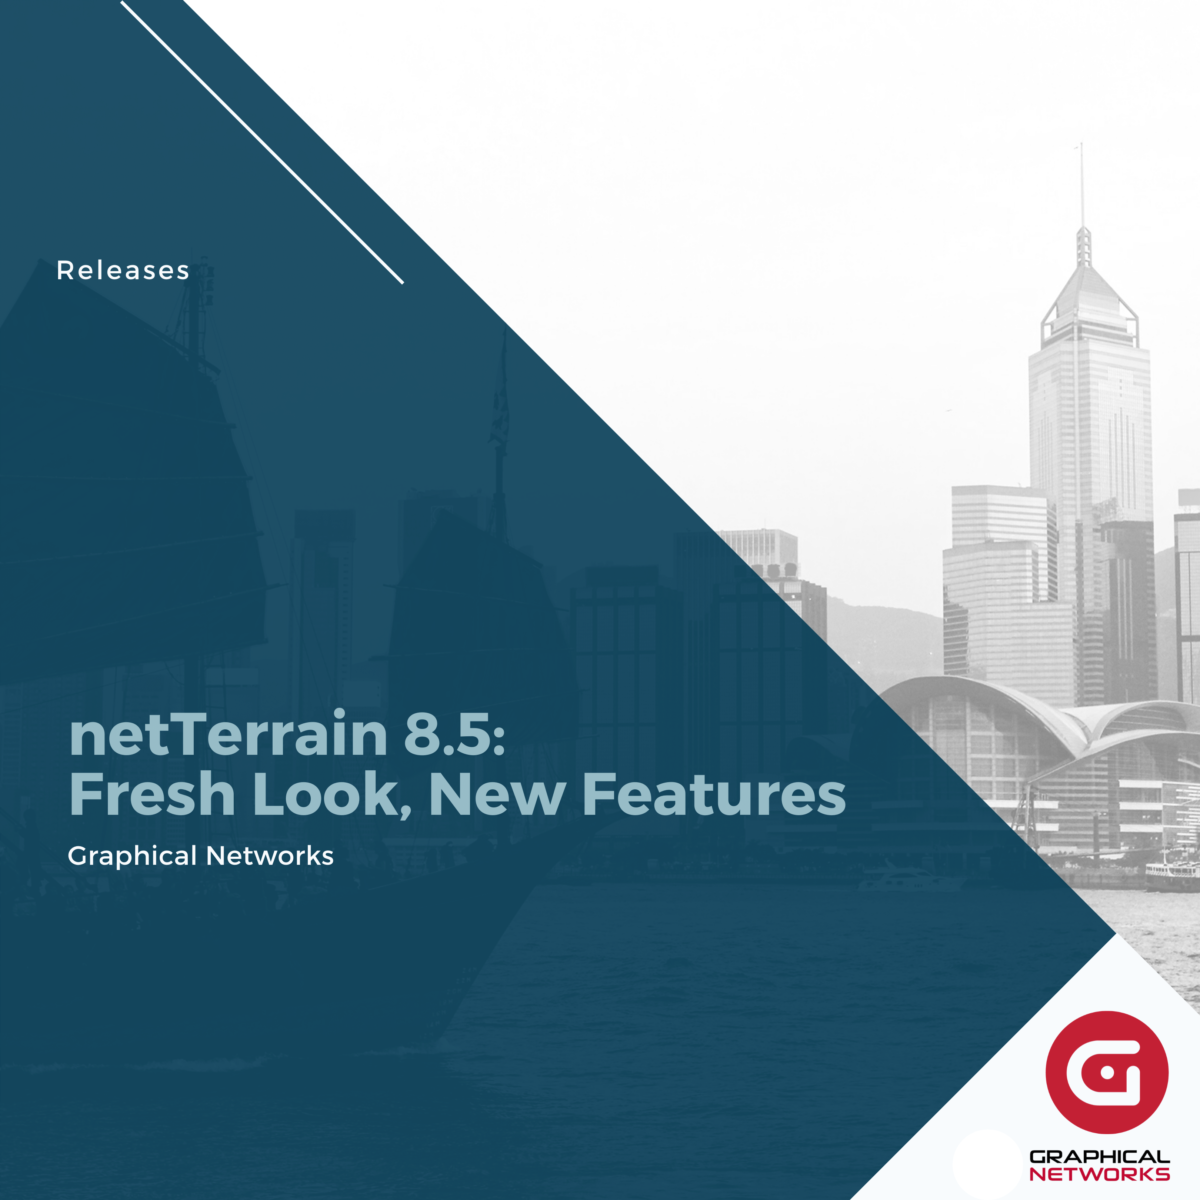 netTerrain 8.5: Fresh Look, New Features